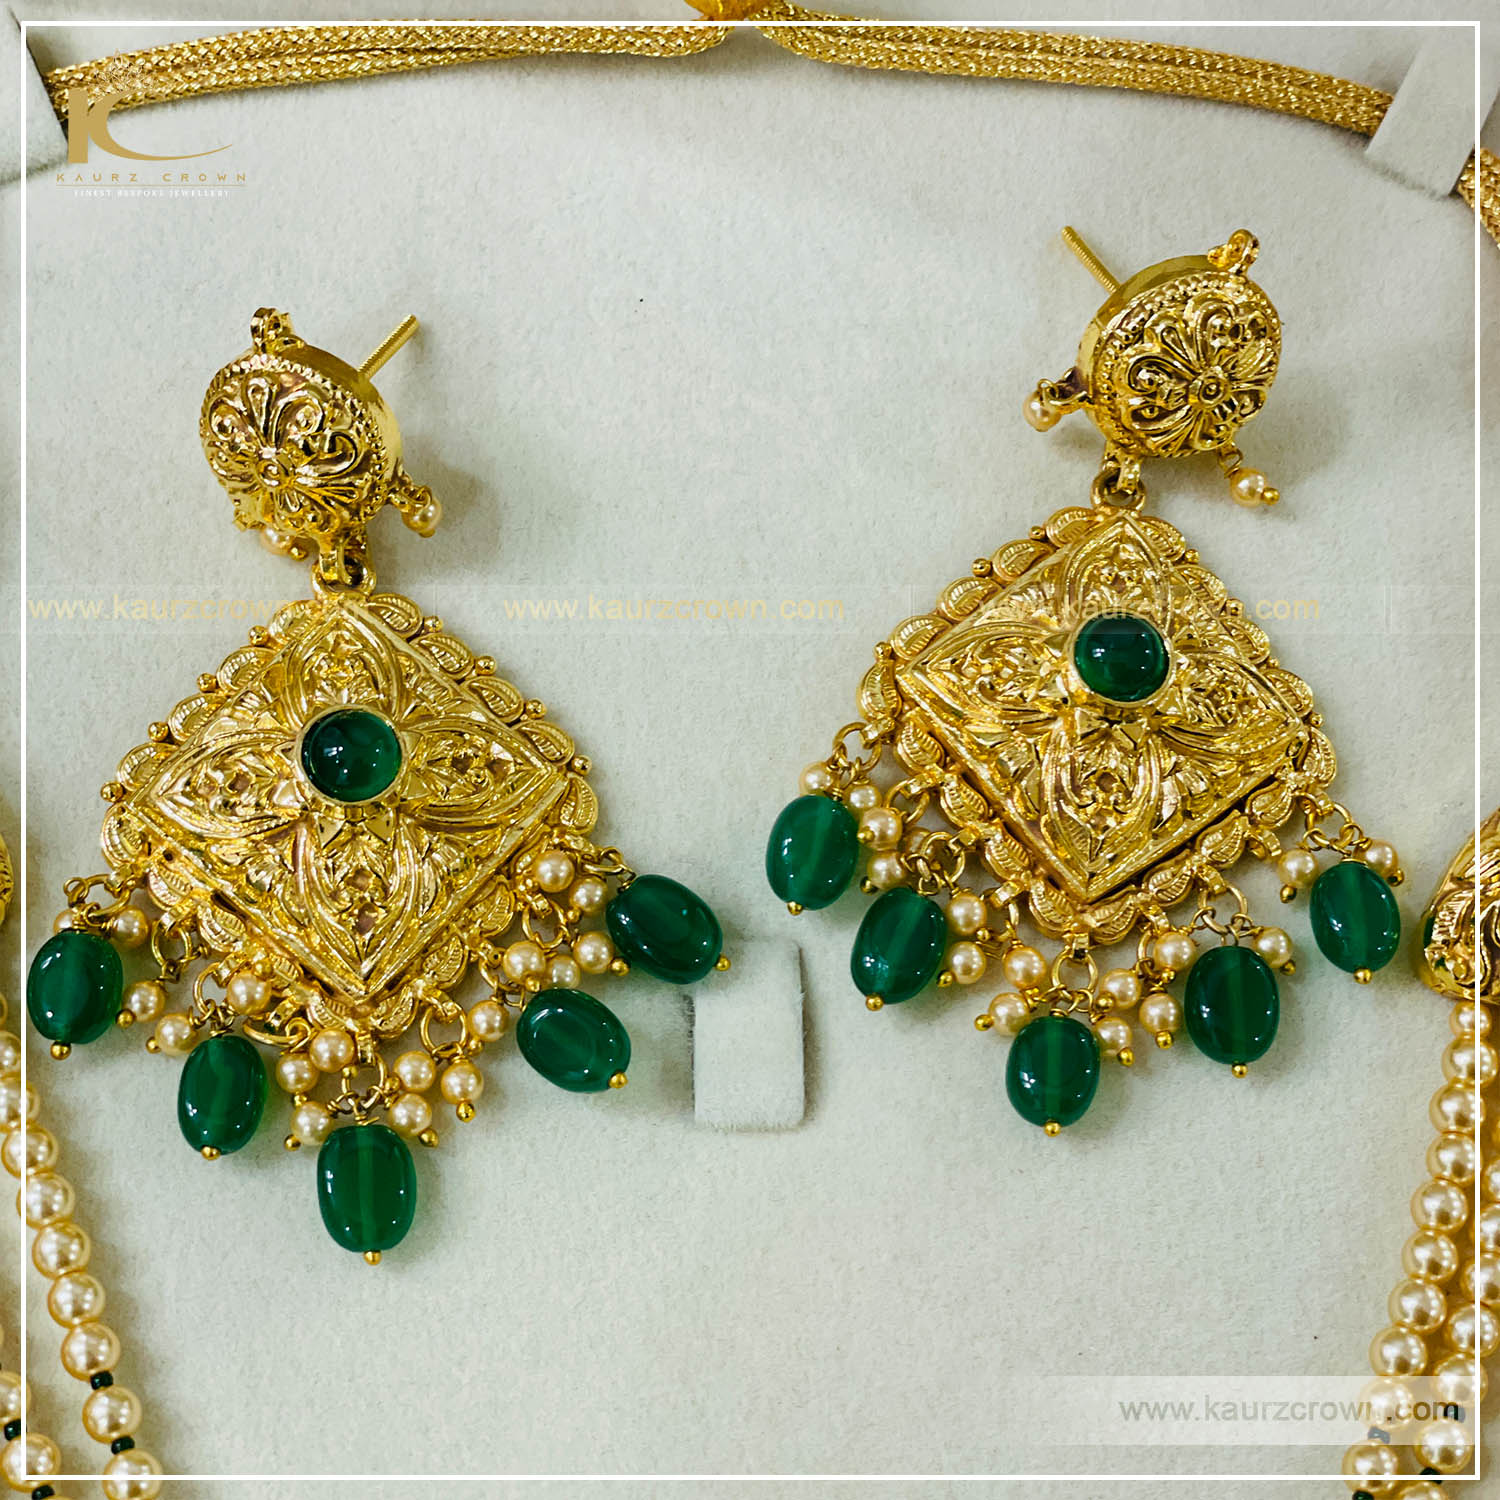 Shanaya Traditional Antique Gold Plated Earrings , kaurz crown , punjabi jewellry , online jewellery store , earrings